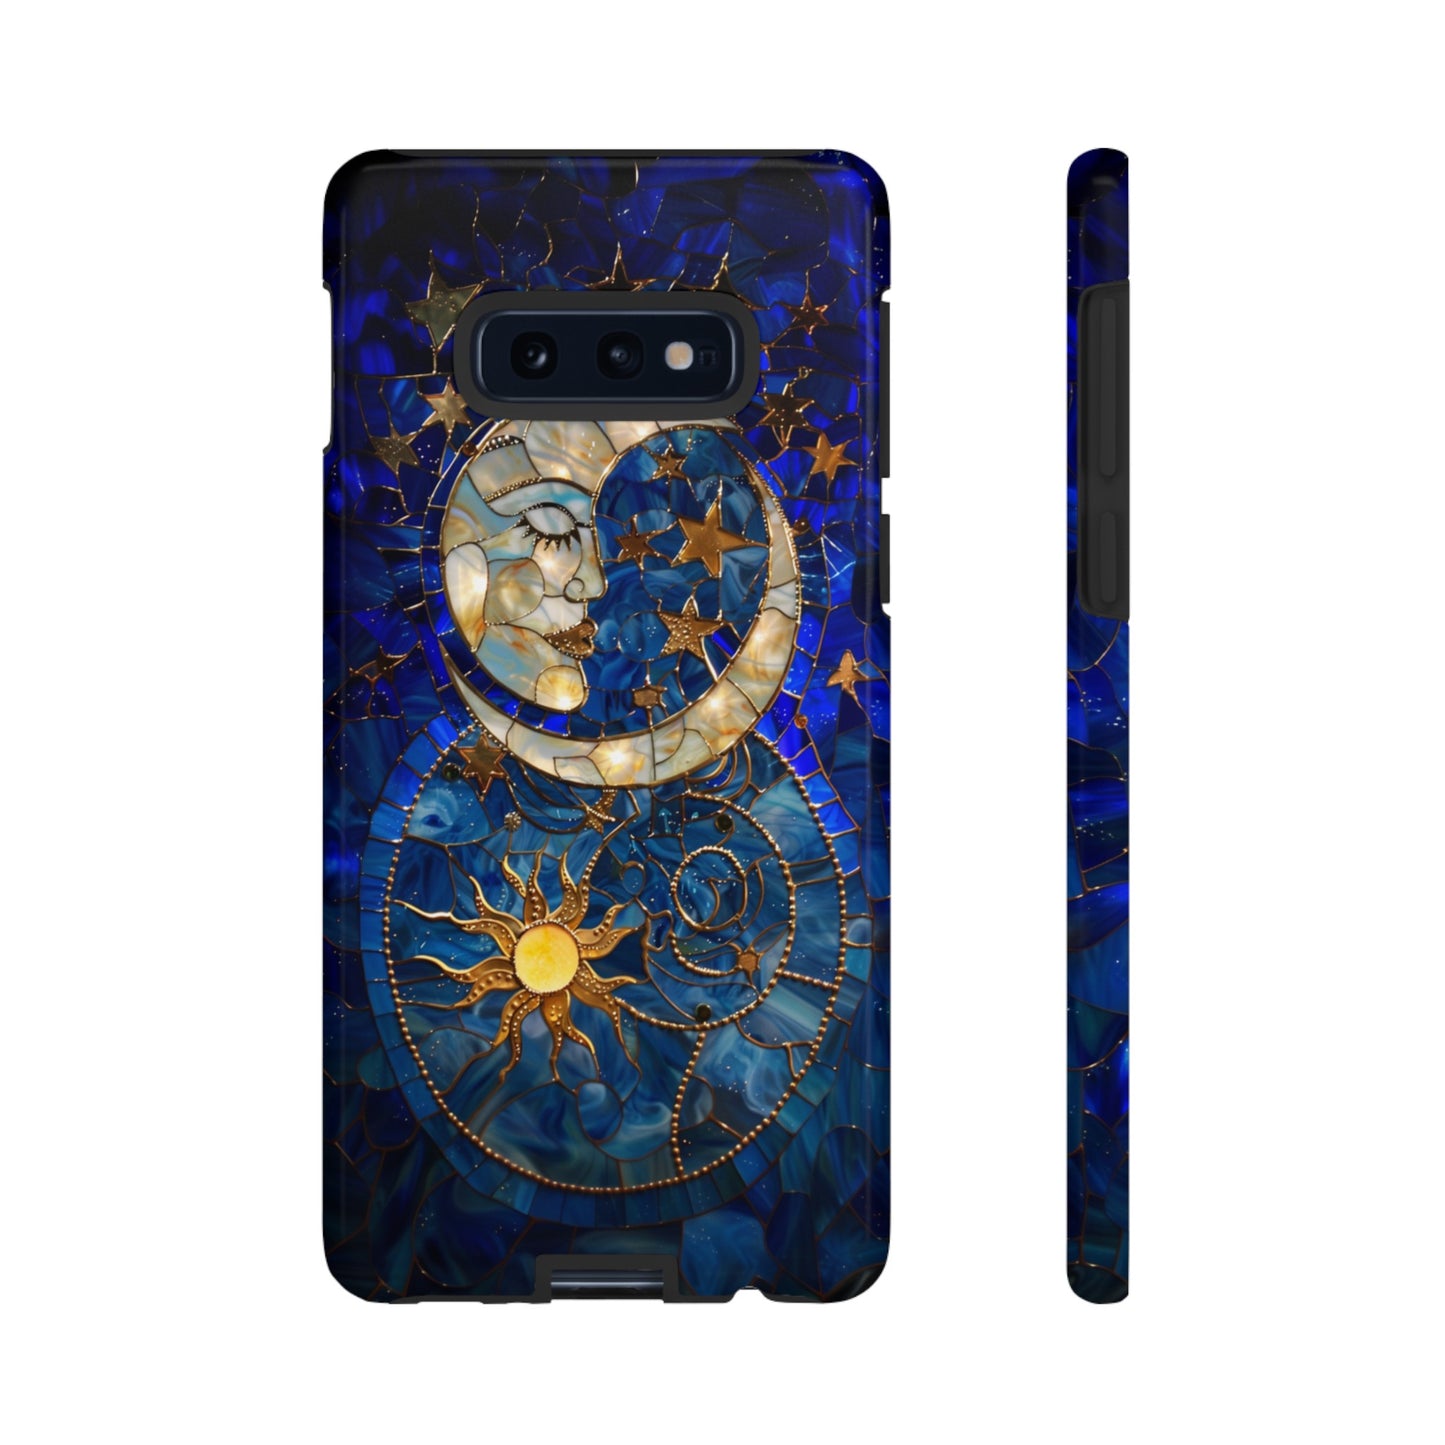 Celestial art phone case for iPhone 12 case